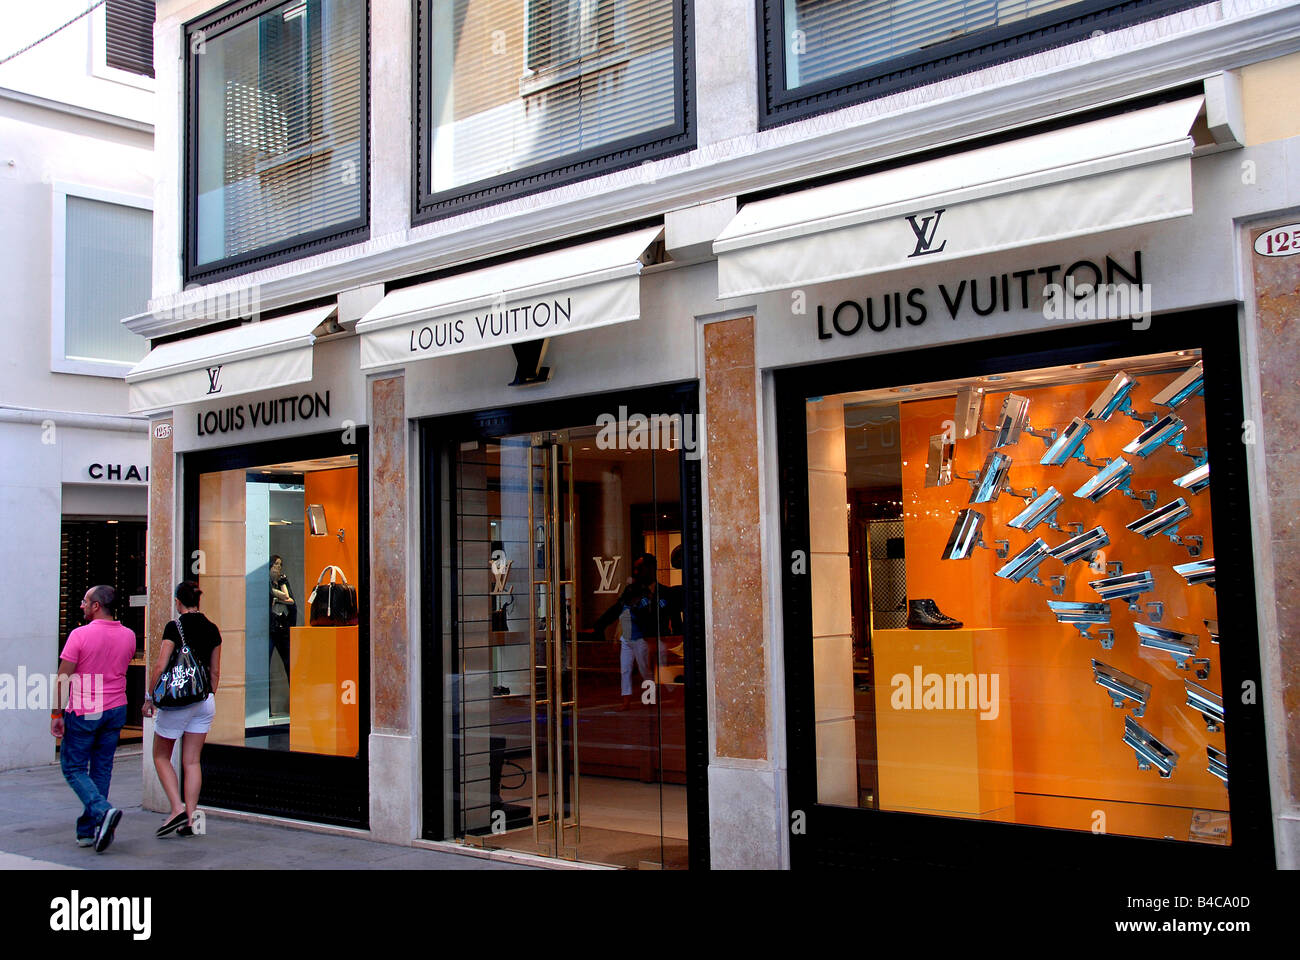 Louis Vuitton shop, Venezia, Italia Foto stock - Alamy